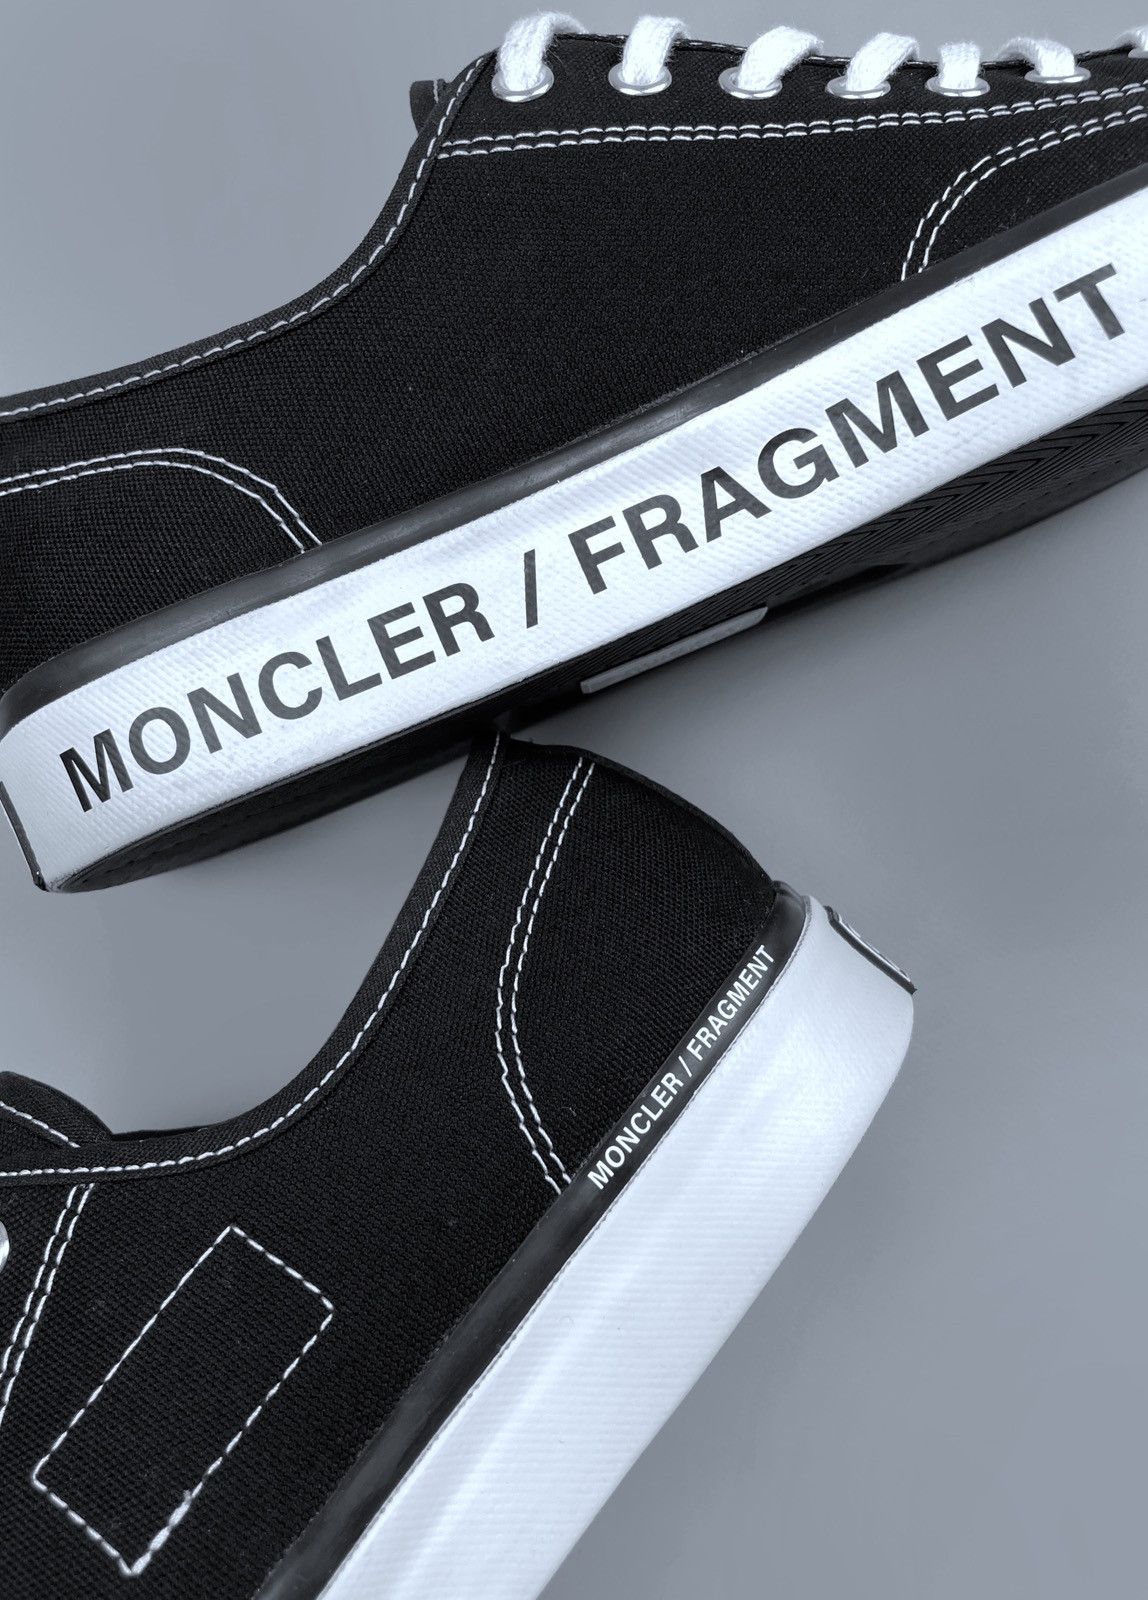 Moncler Fragment / Moncler x Converse Jack Purcell Low Shoes US 9.5 |  Grailed